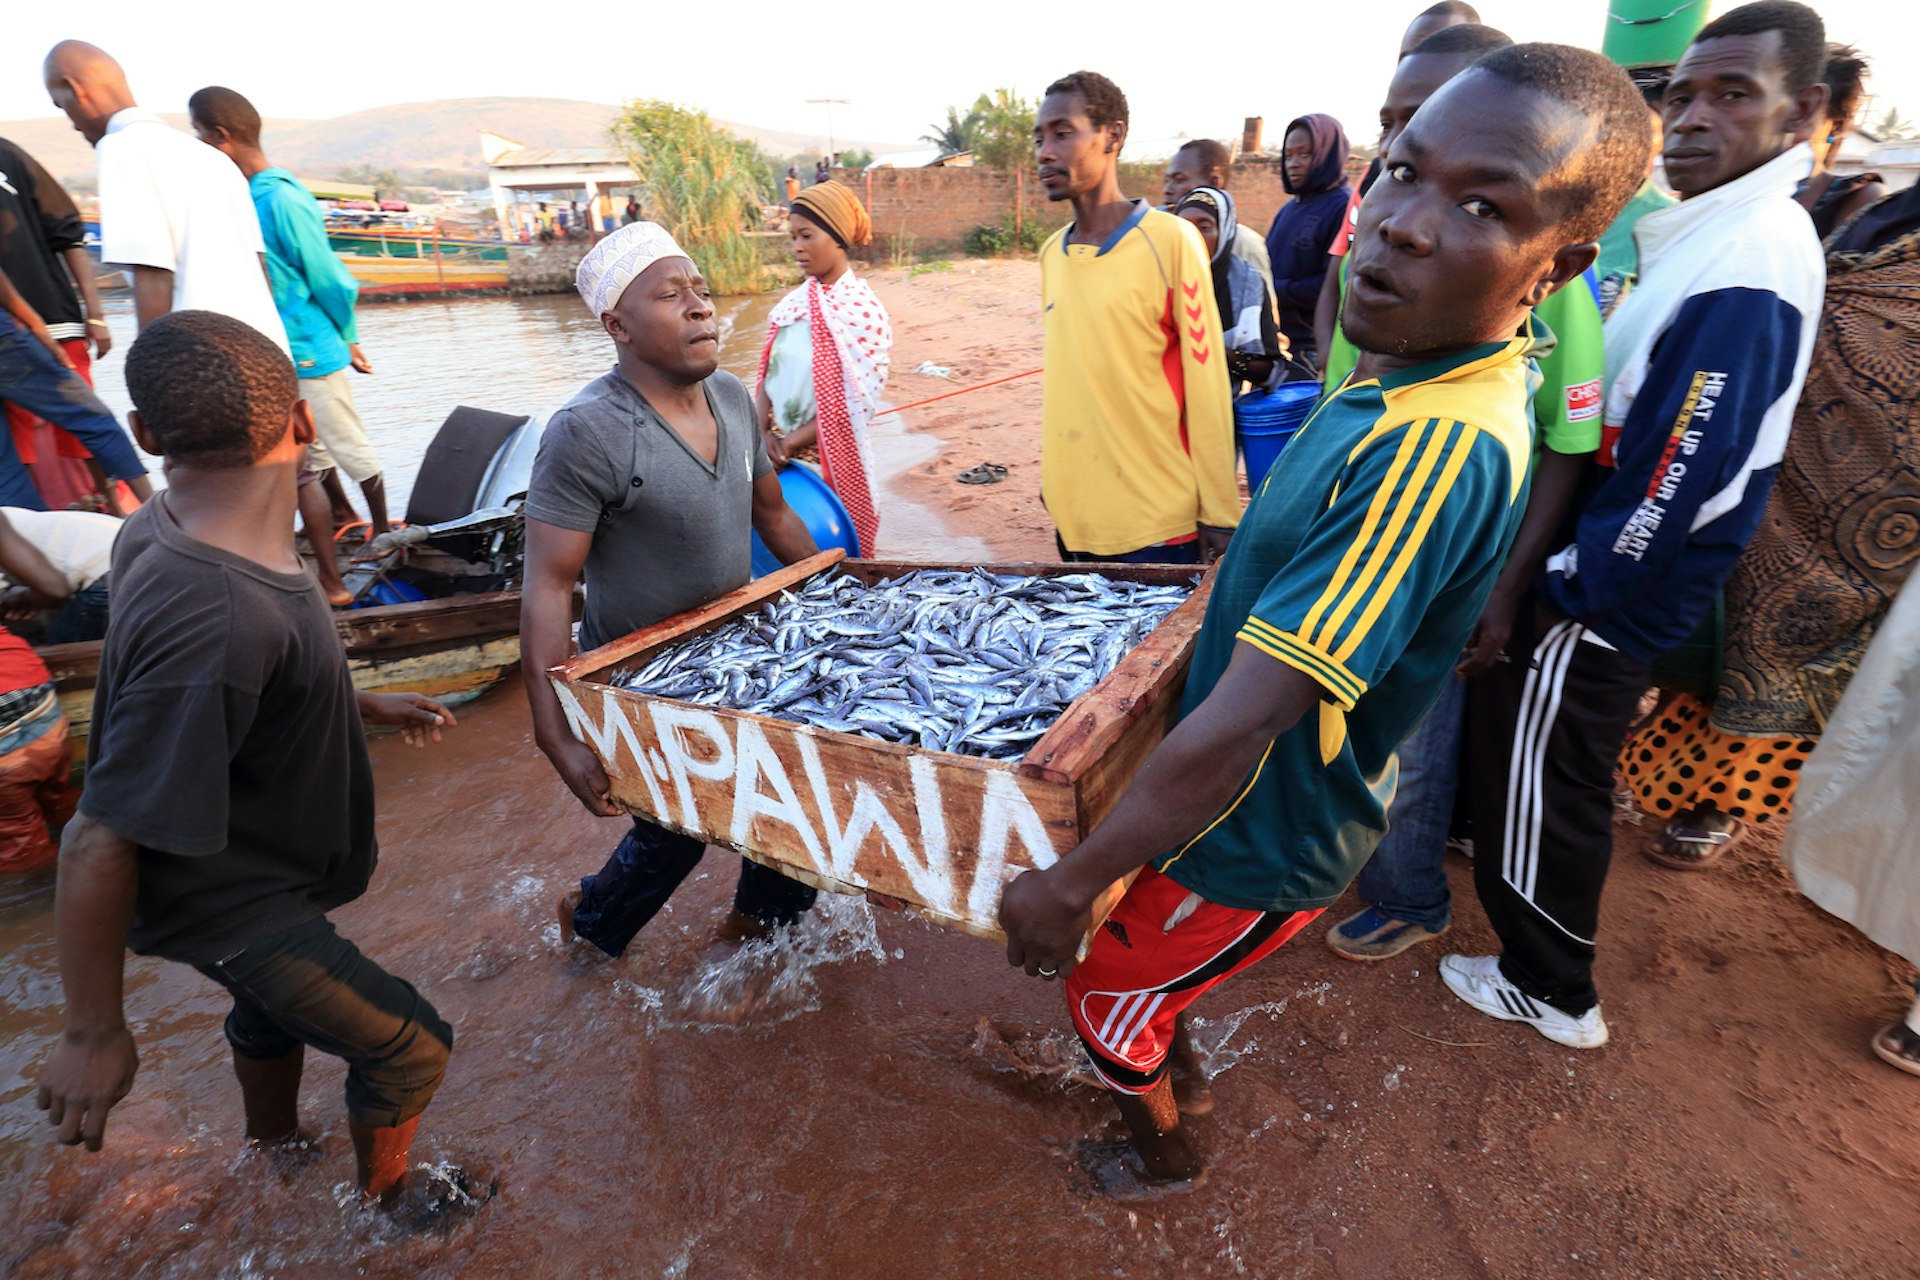 Fisherman carry and trade fish on the shore of Lake Tanganyika in Kigoma, Tanzania, East Africa